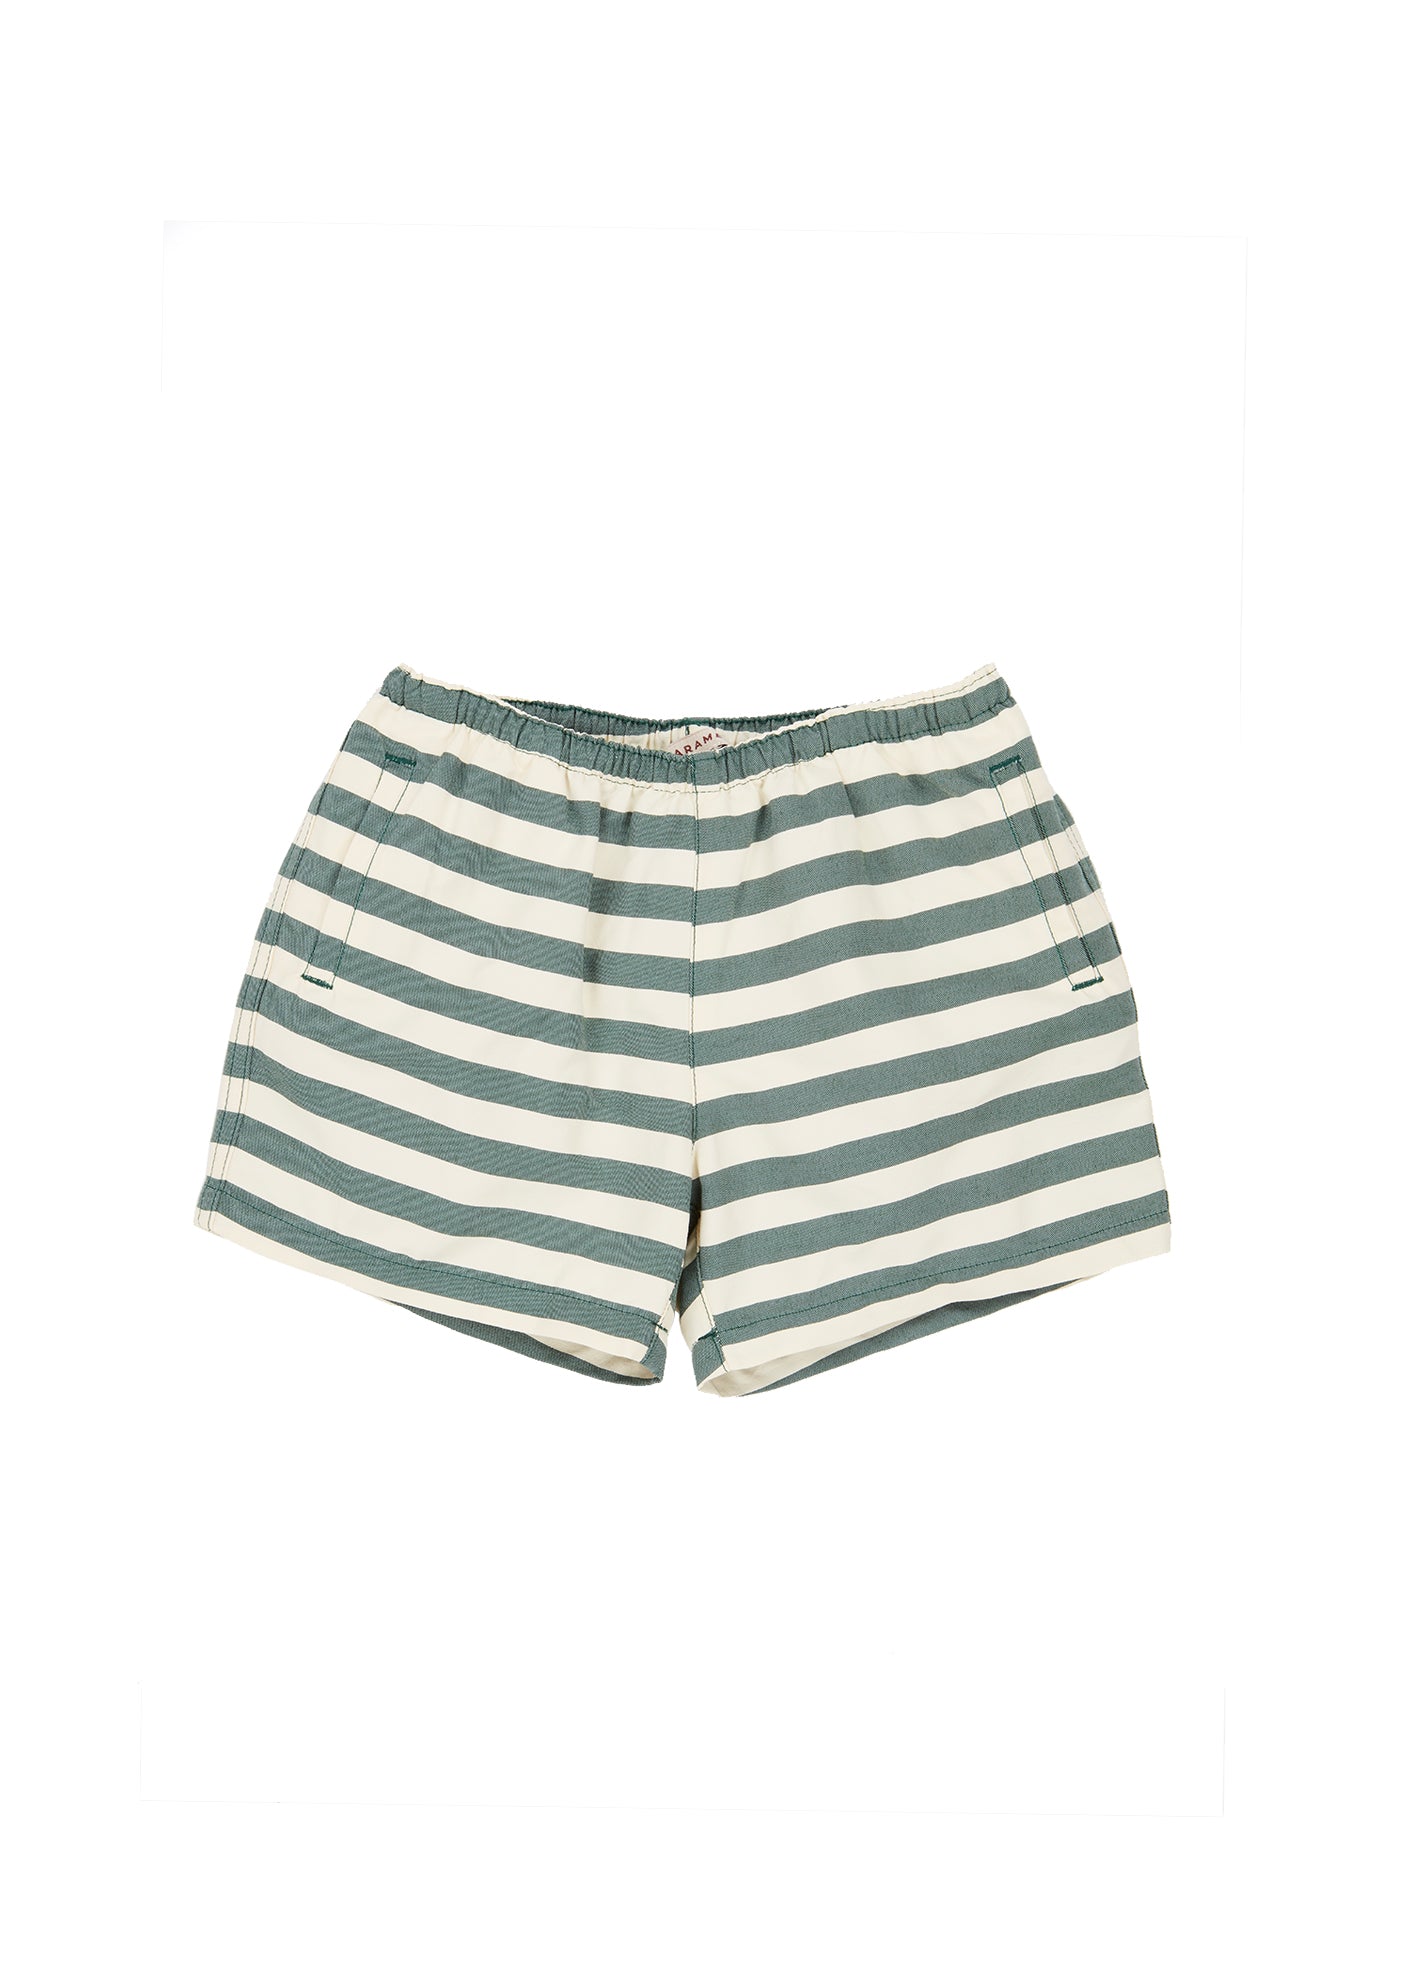 Boys Green Striped Swim Shorts